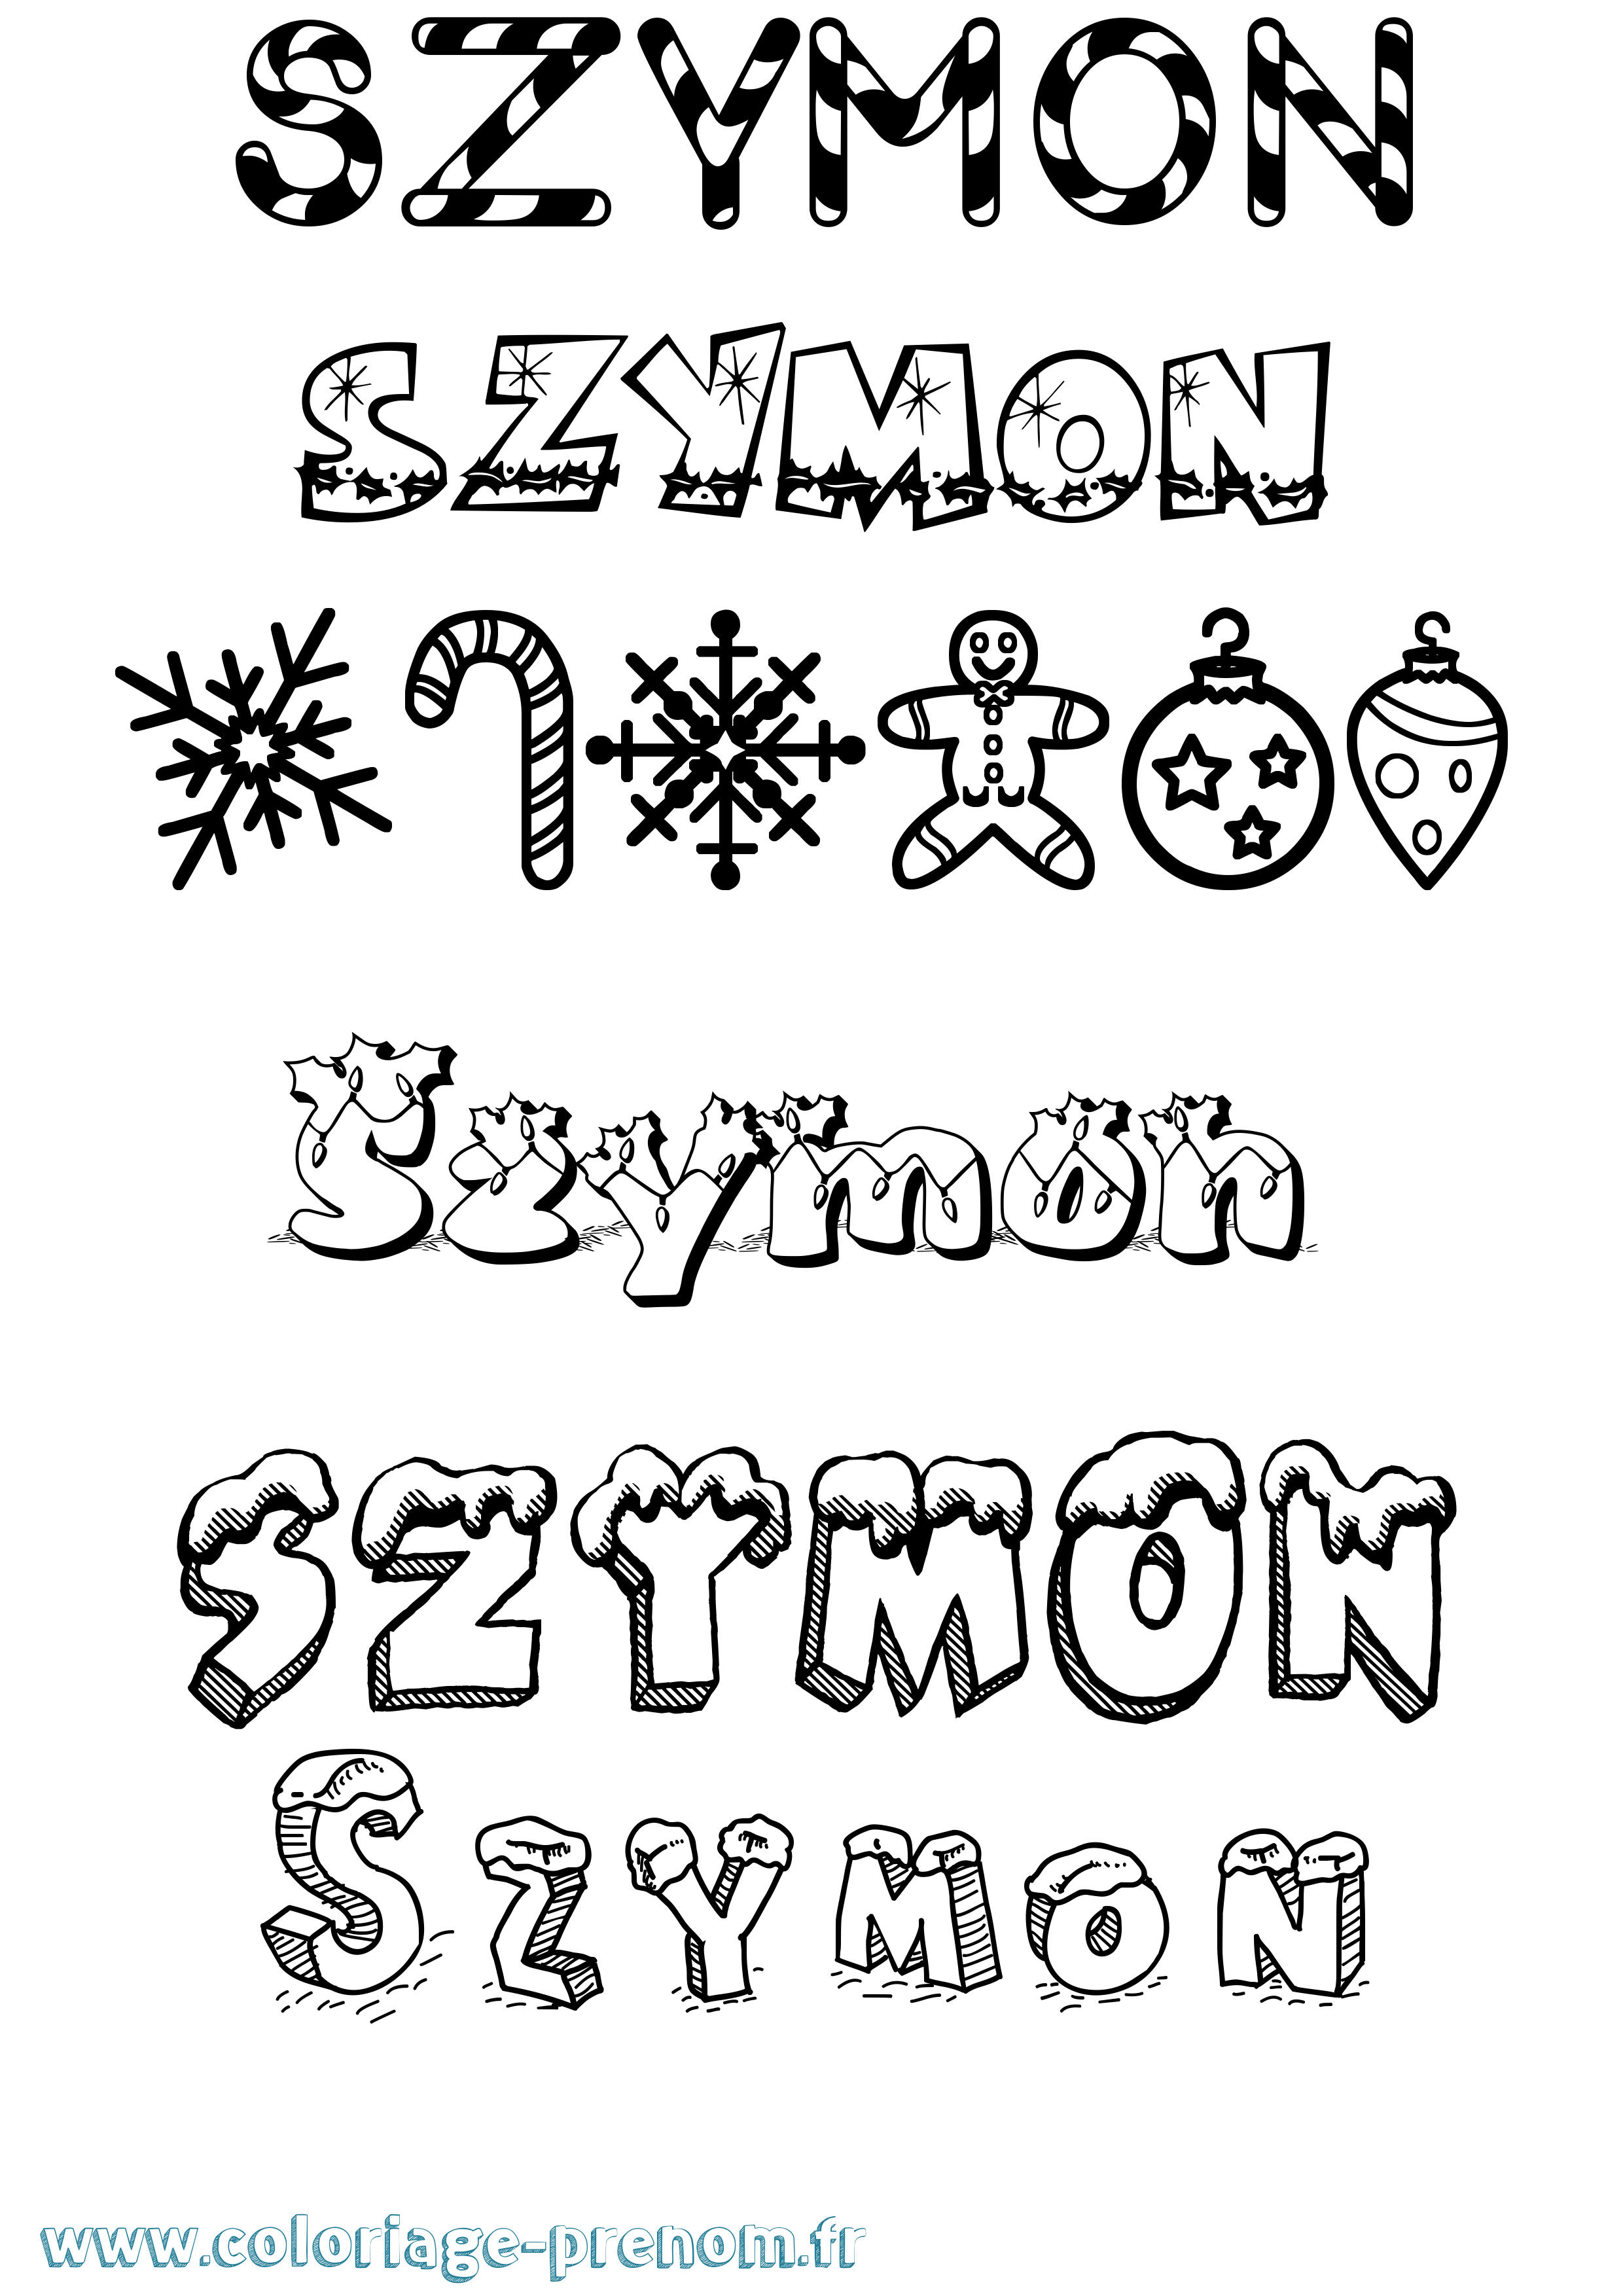 Coloriage prénom Szymon Noël